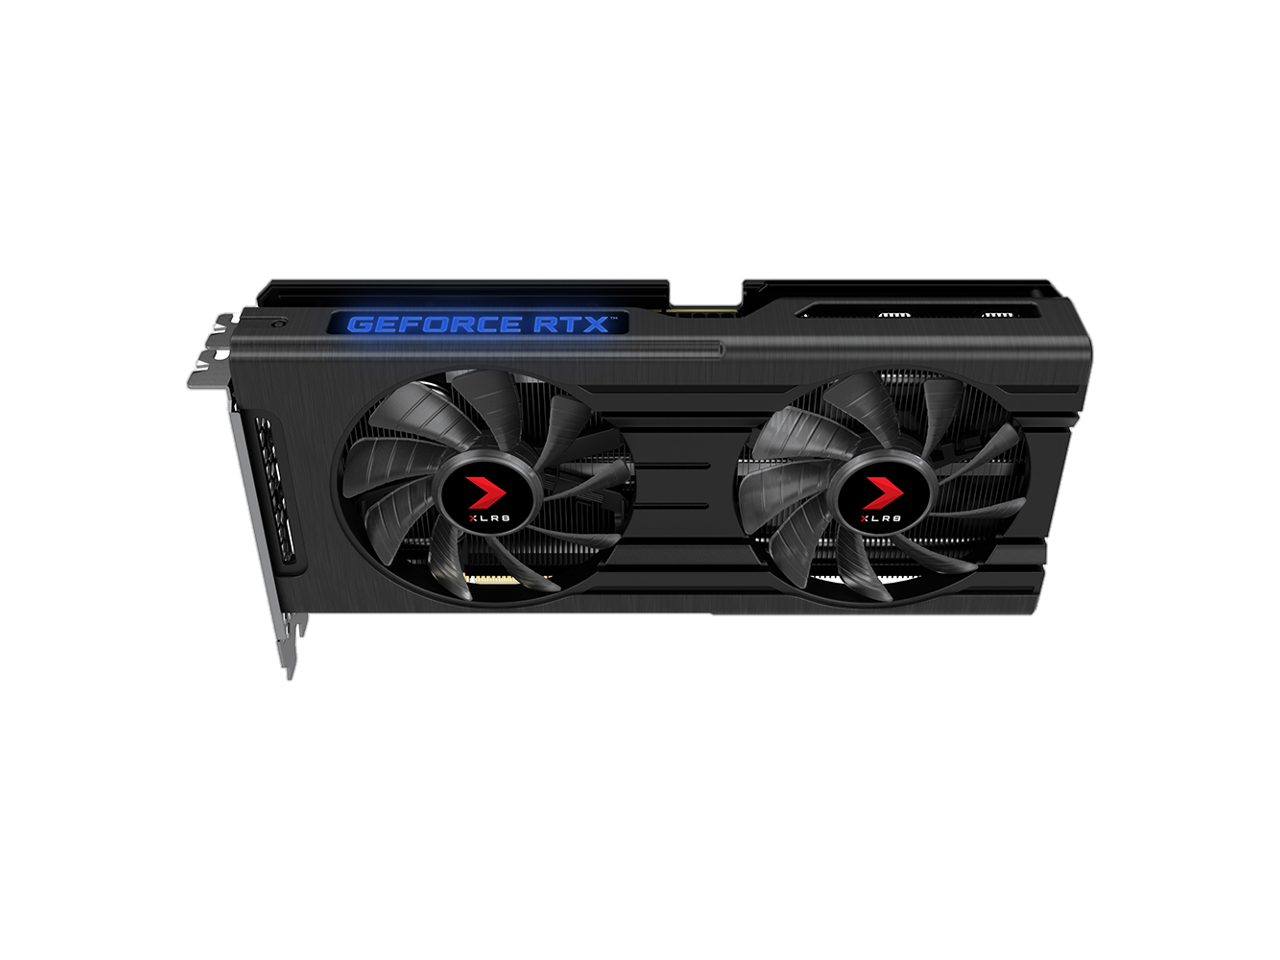 PNY XLR8 Gaming GeForce RTX 3050 8GB GDDR6 PCI Express 4.0 x16 Video Card Dual Fan Edition VCG30508DFXPPB